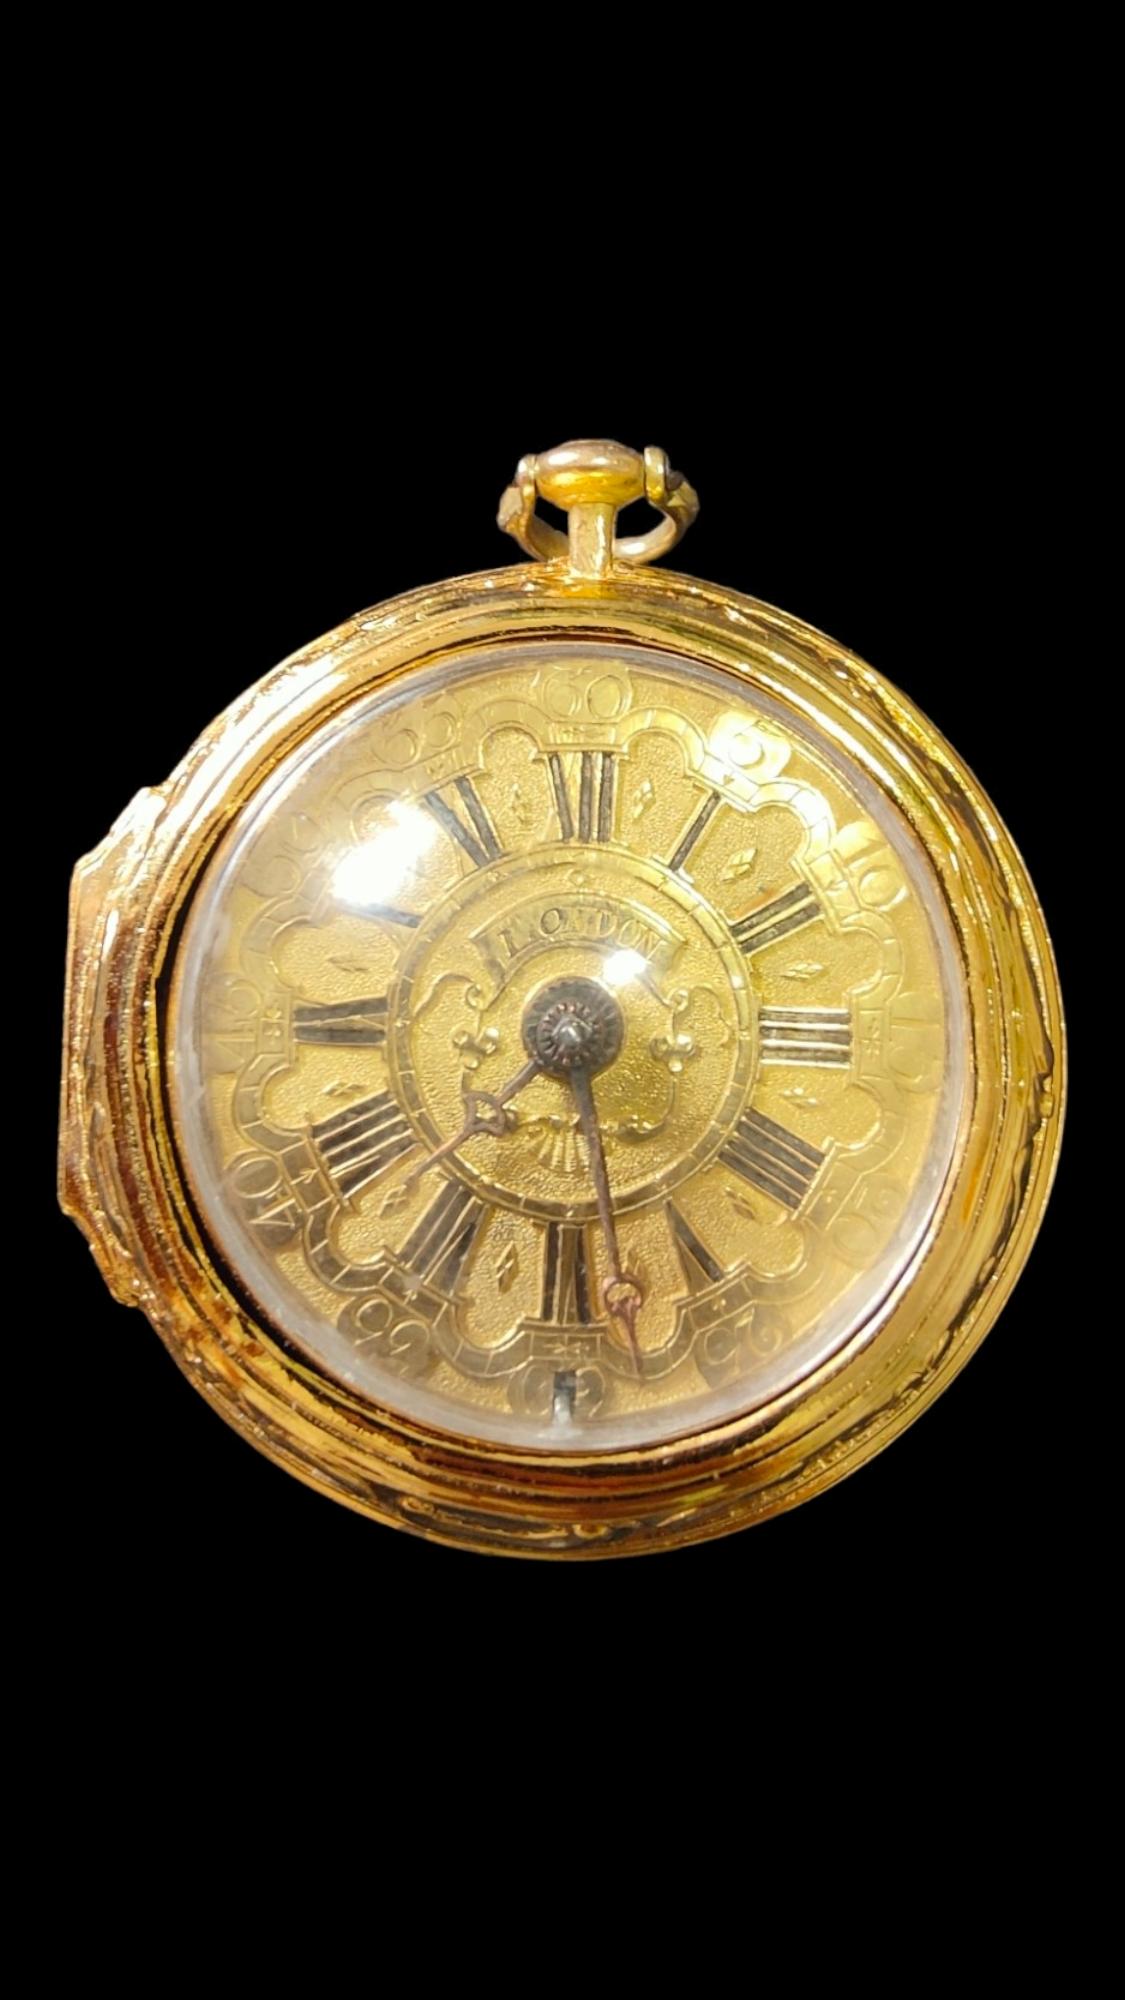 17th century watch